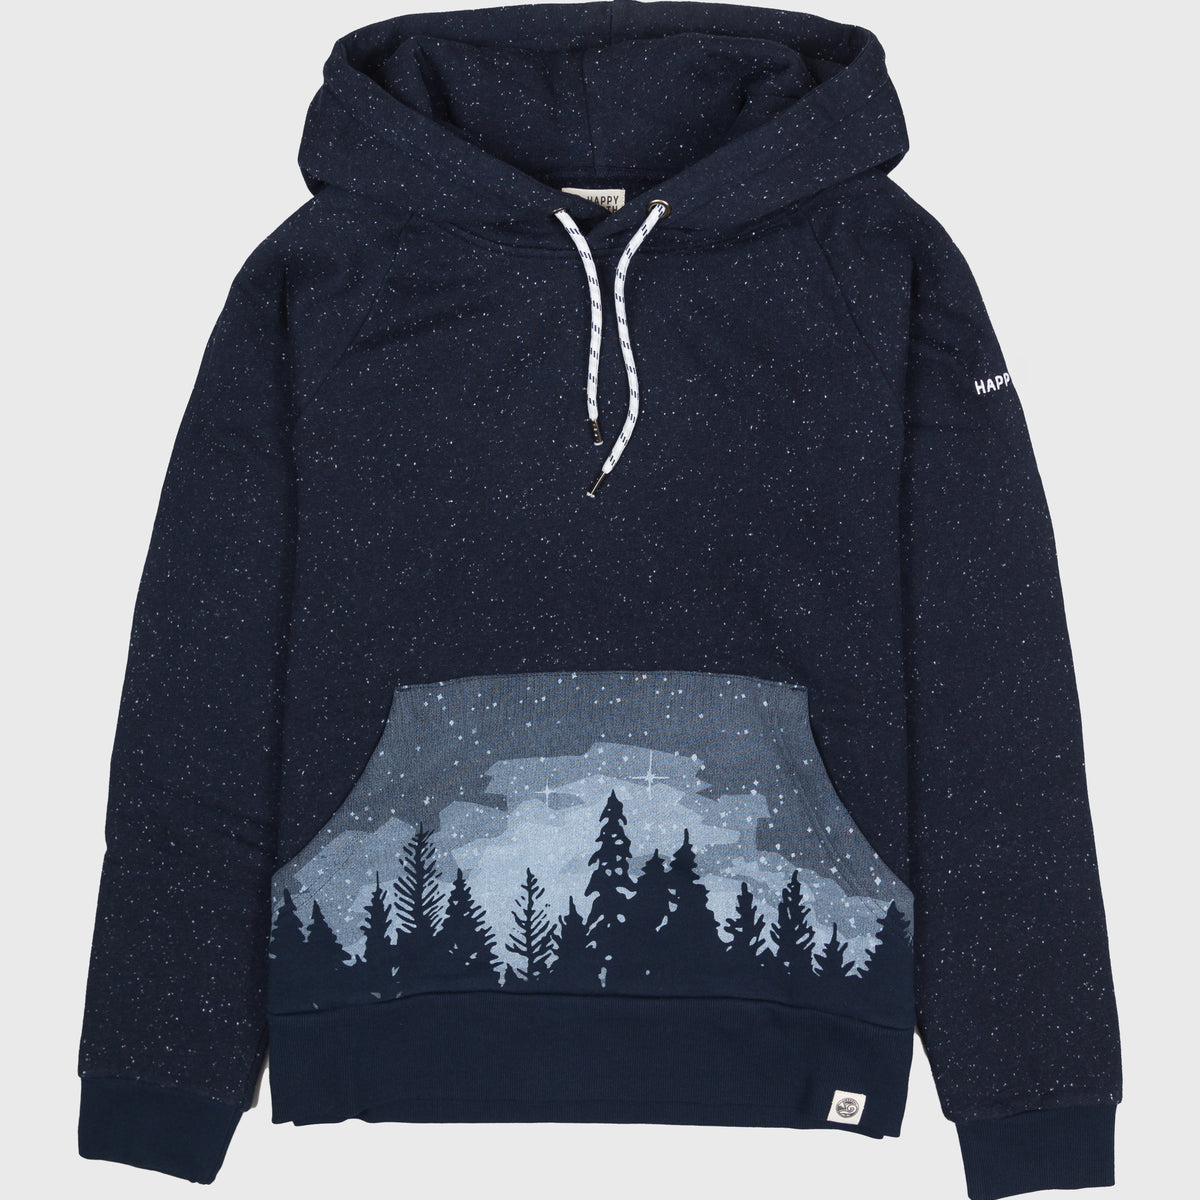 All-Gender Starlit Night Organic Fleece Hoodie Sweatshirt - Navy XL